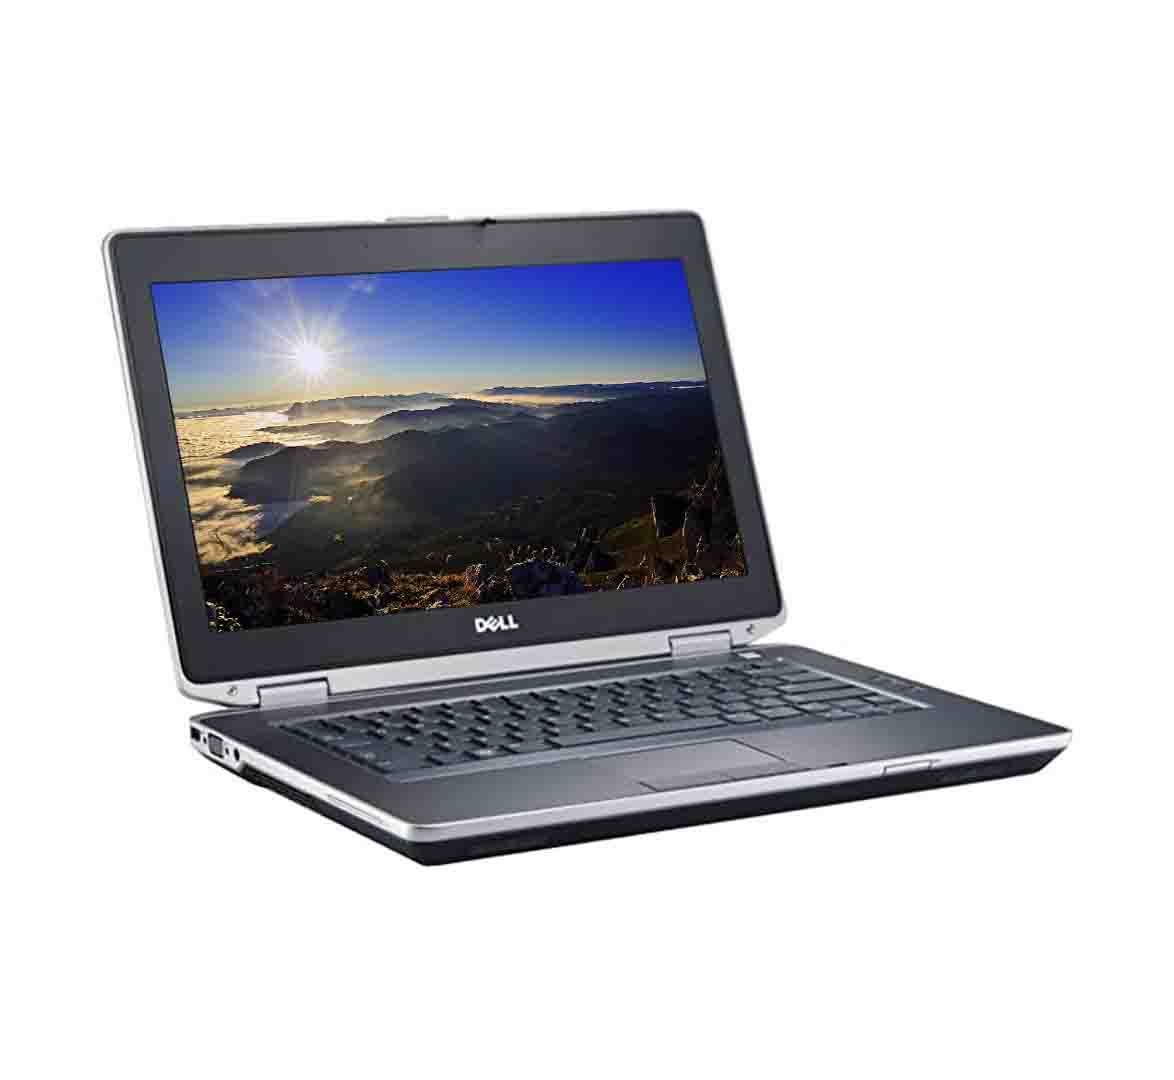 Dell Latitude E6430 Business Laptop, Intel Core i5-3rd Generation CPU, 8GB RAM, 500GB HDD, 14 inch Display, Windows 10 Pro, Refurbished Laptop